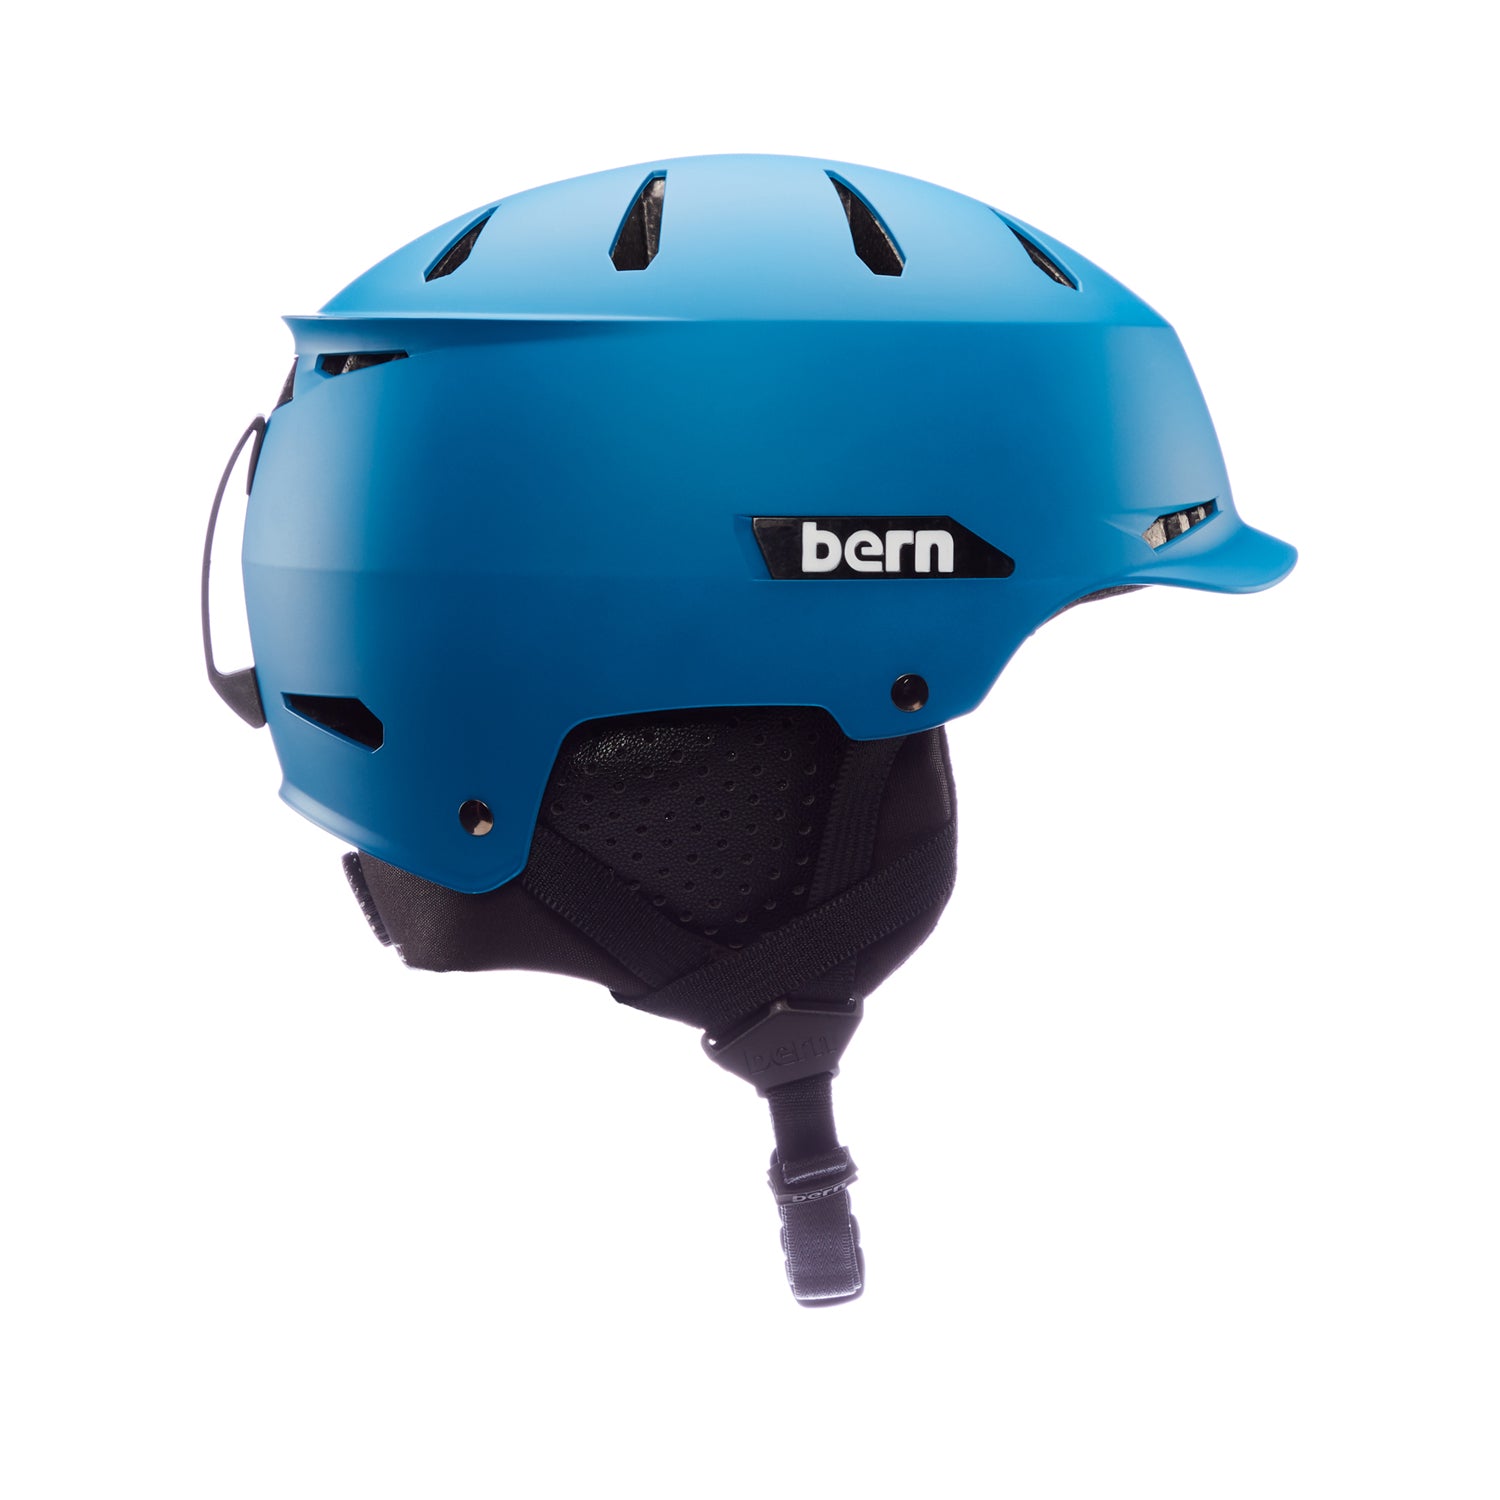 Hendrix Winter Helmet (Barn Deal)